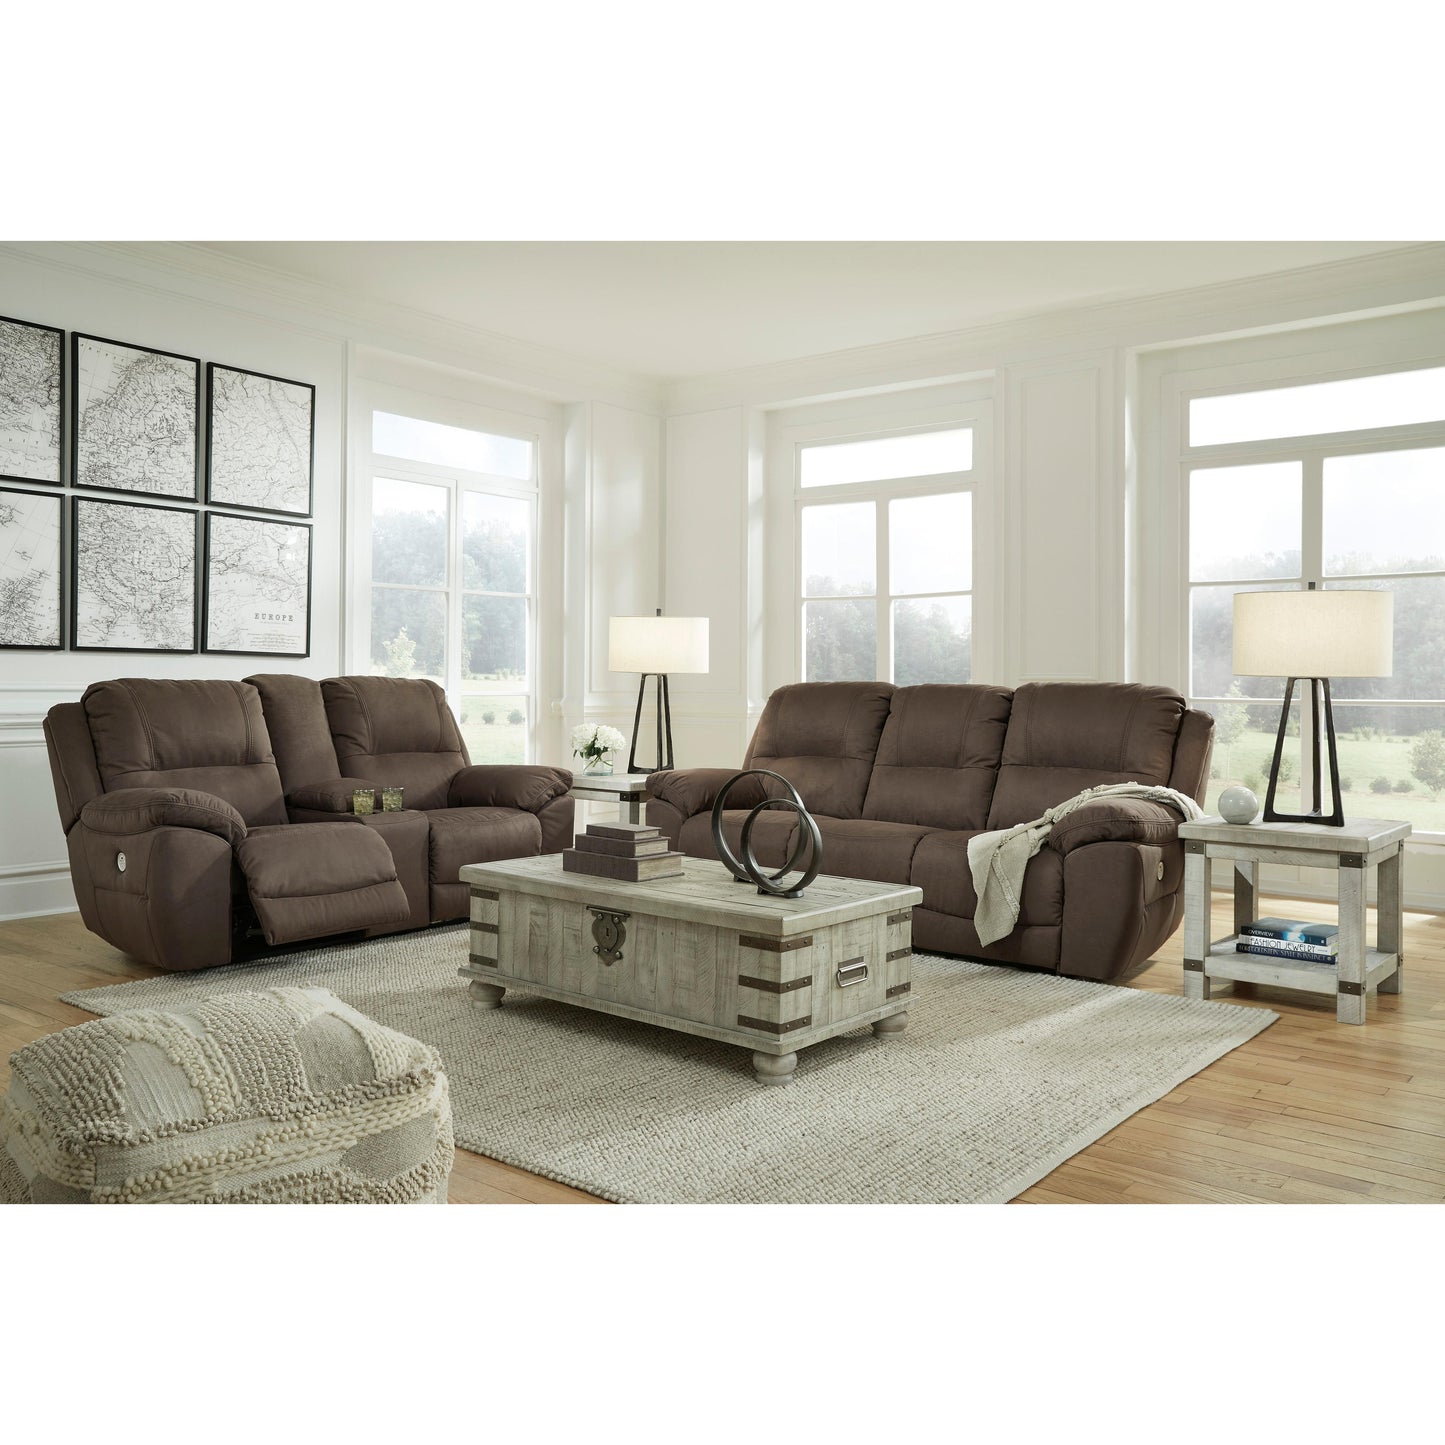 Signature Design by Ashley Next-Gen Gaucho 54204 2 pc Power Reclining Living Room Set IMAGE 1